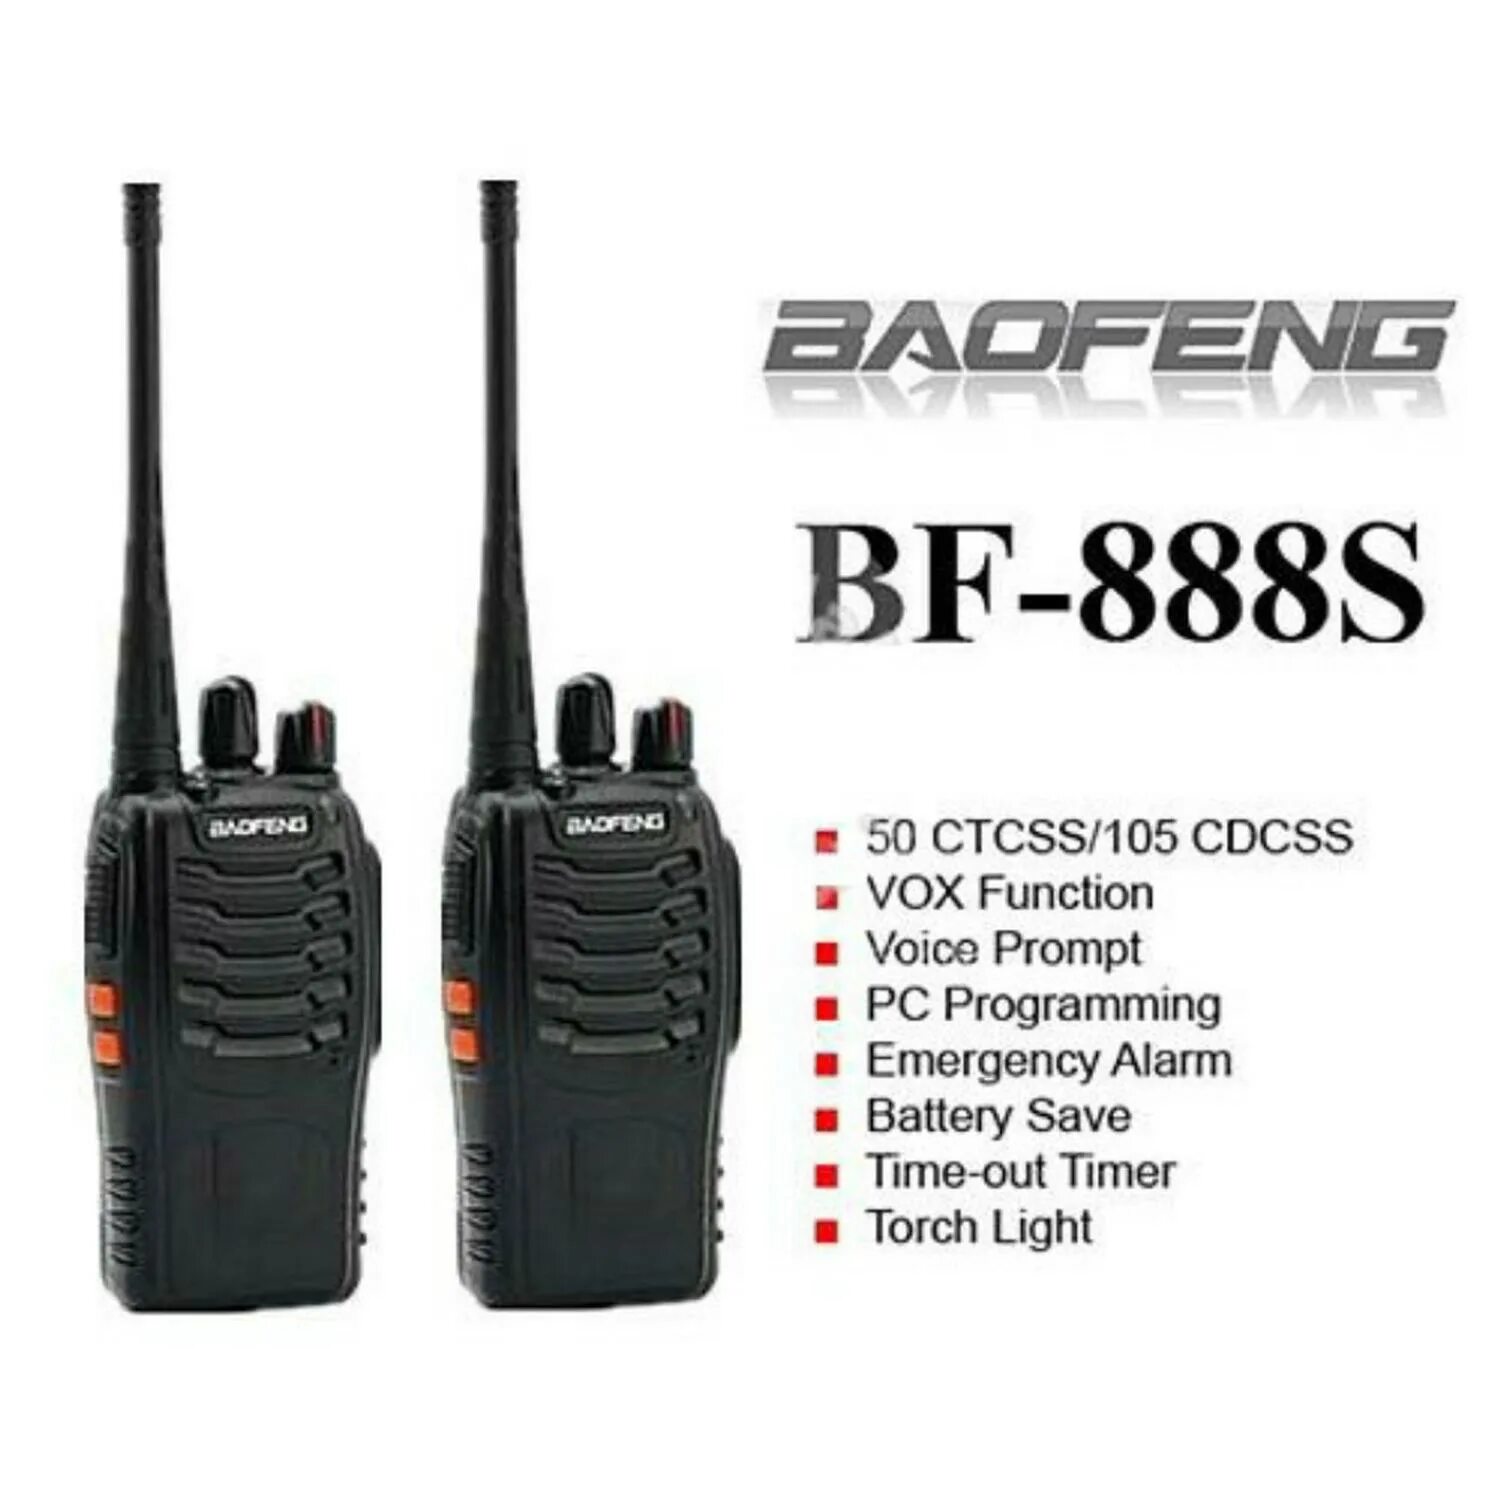 Baofeng частоты каналов. Баофенг bf 888. Baofeng bf-888s. Bf-888s. Частоты рации баофенг 888s.